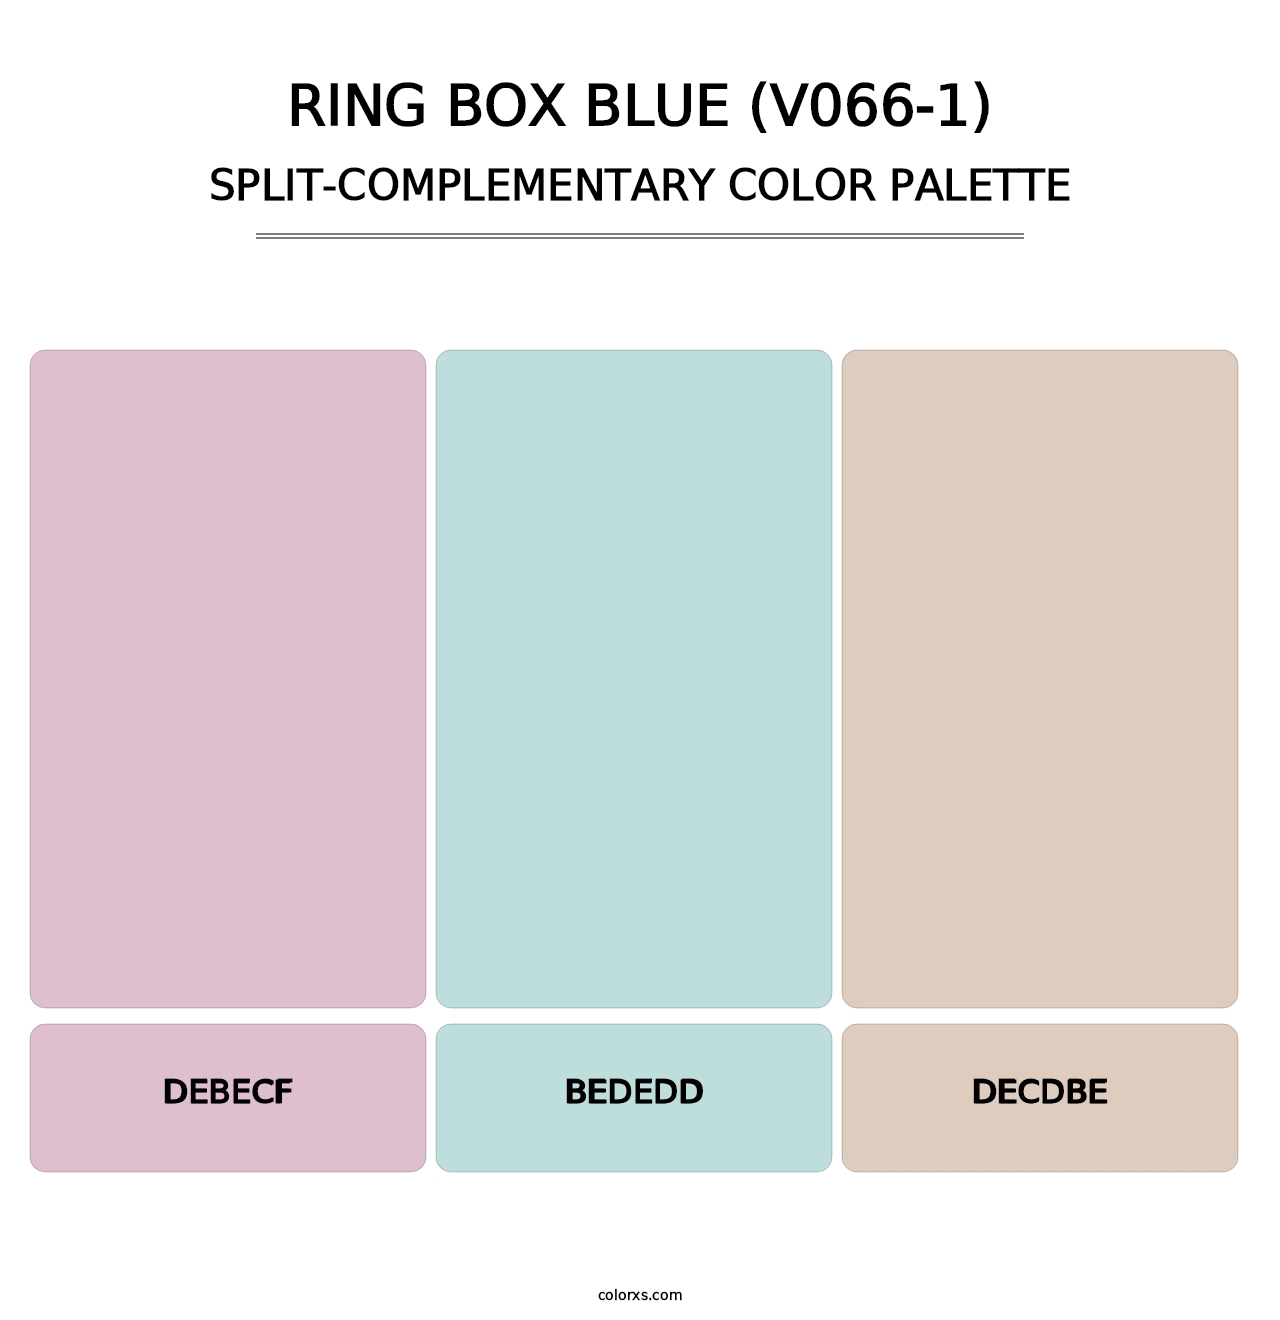 Ring Box Blue (V066-1) - Split-Complementary Color Palette